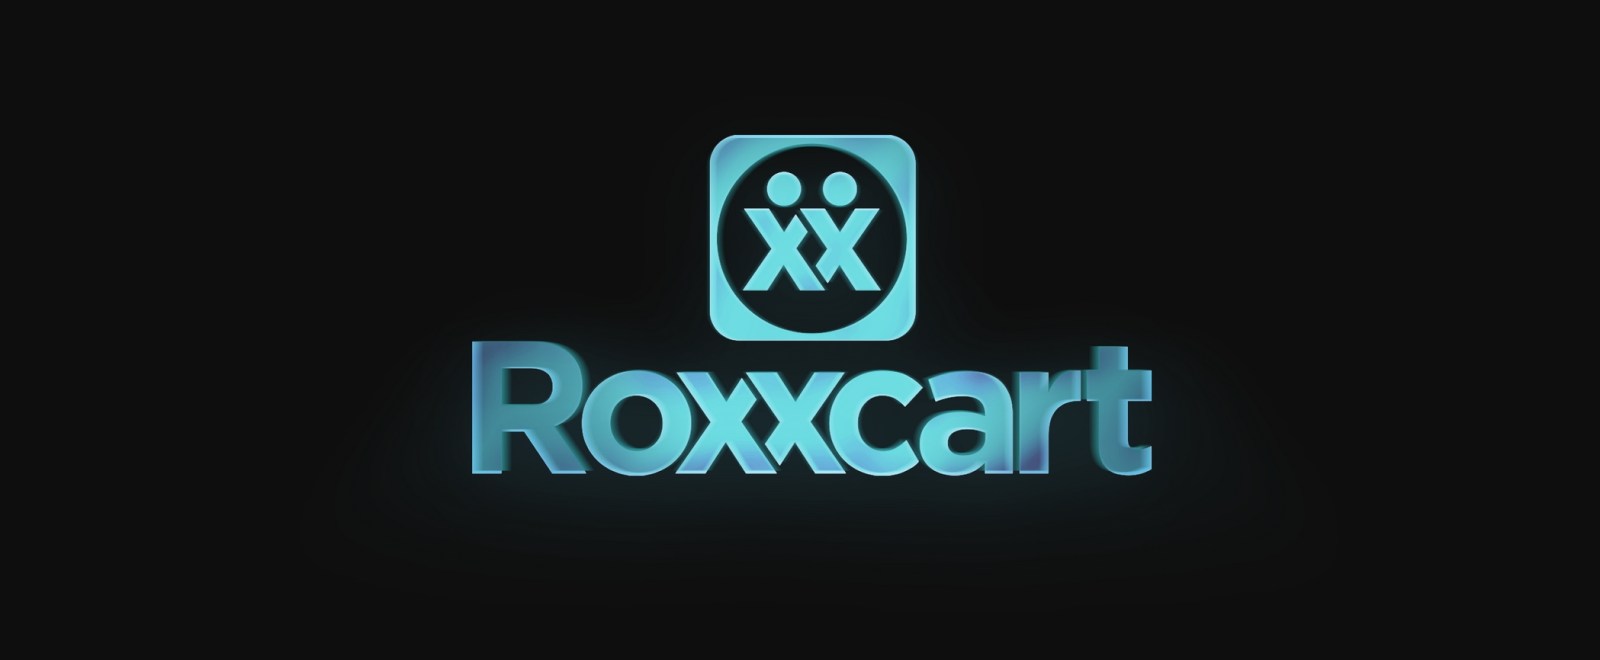 Roxxcart.jpg